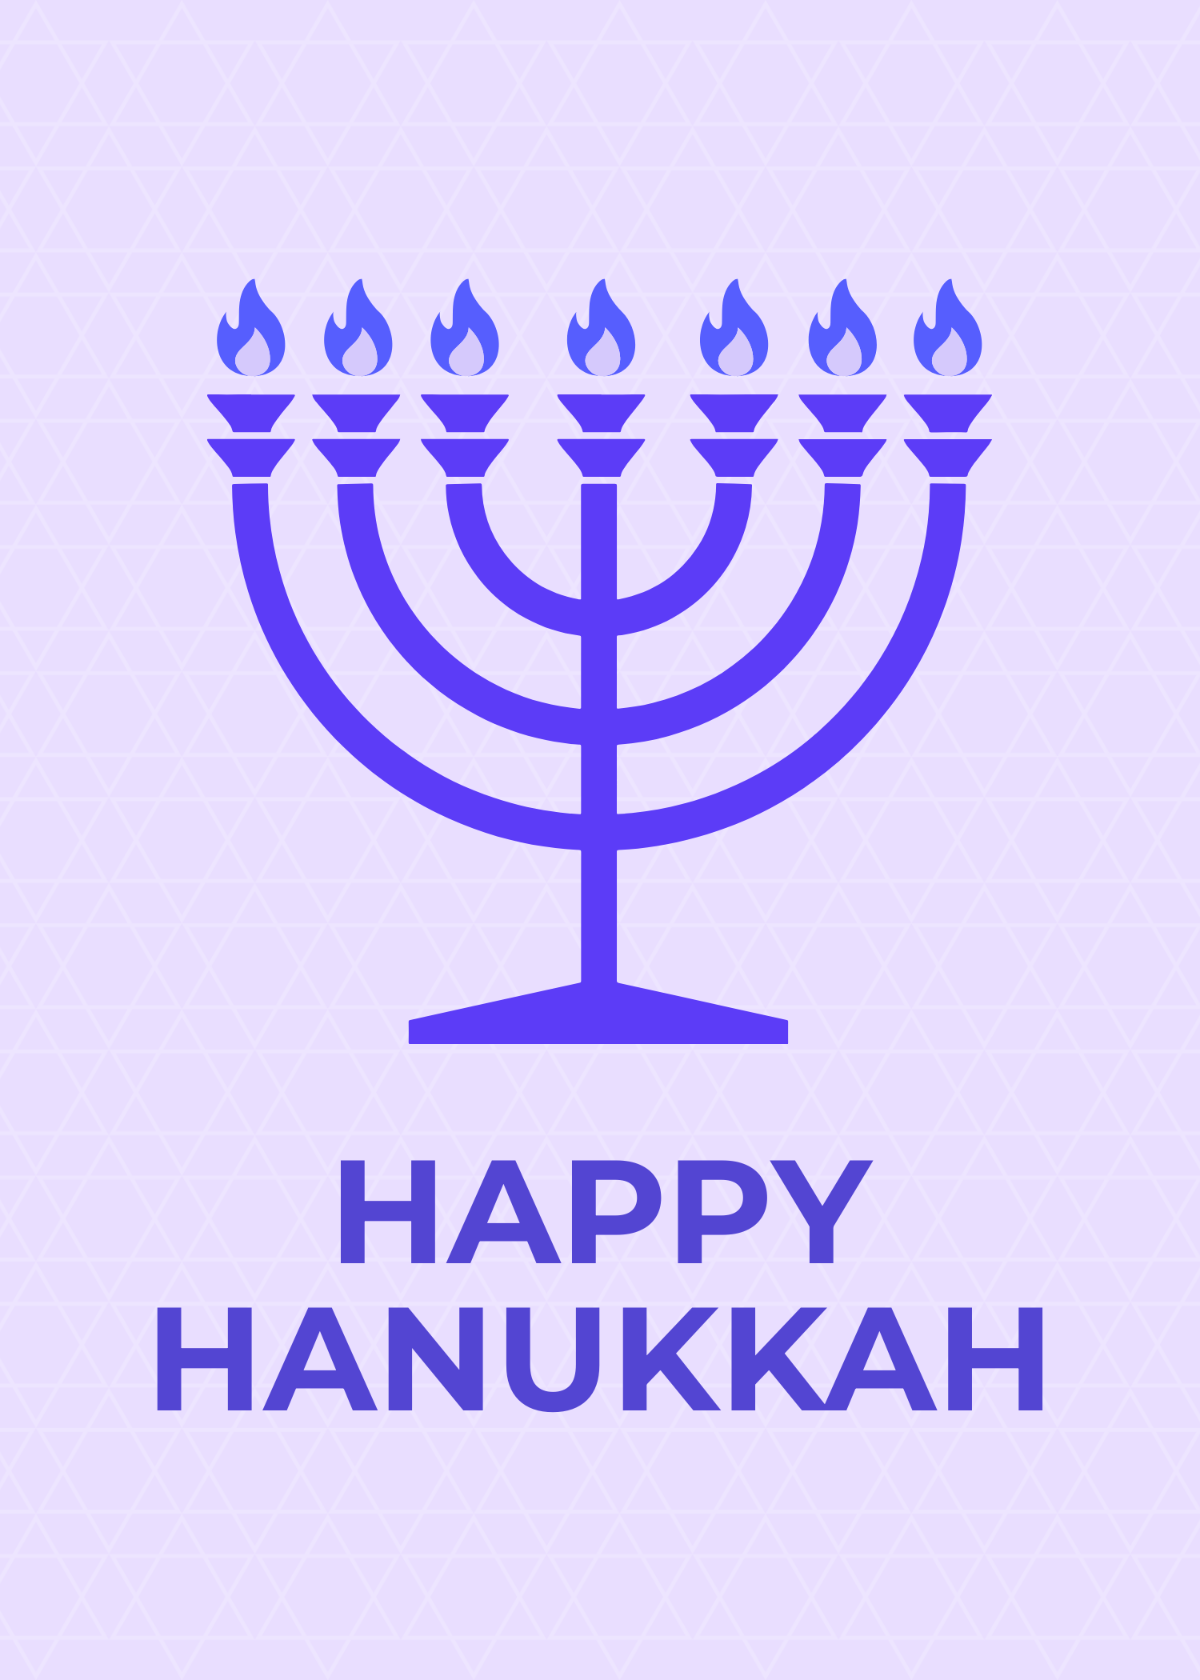 Hanukkah Greeting Card Template